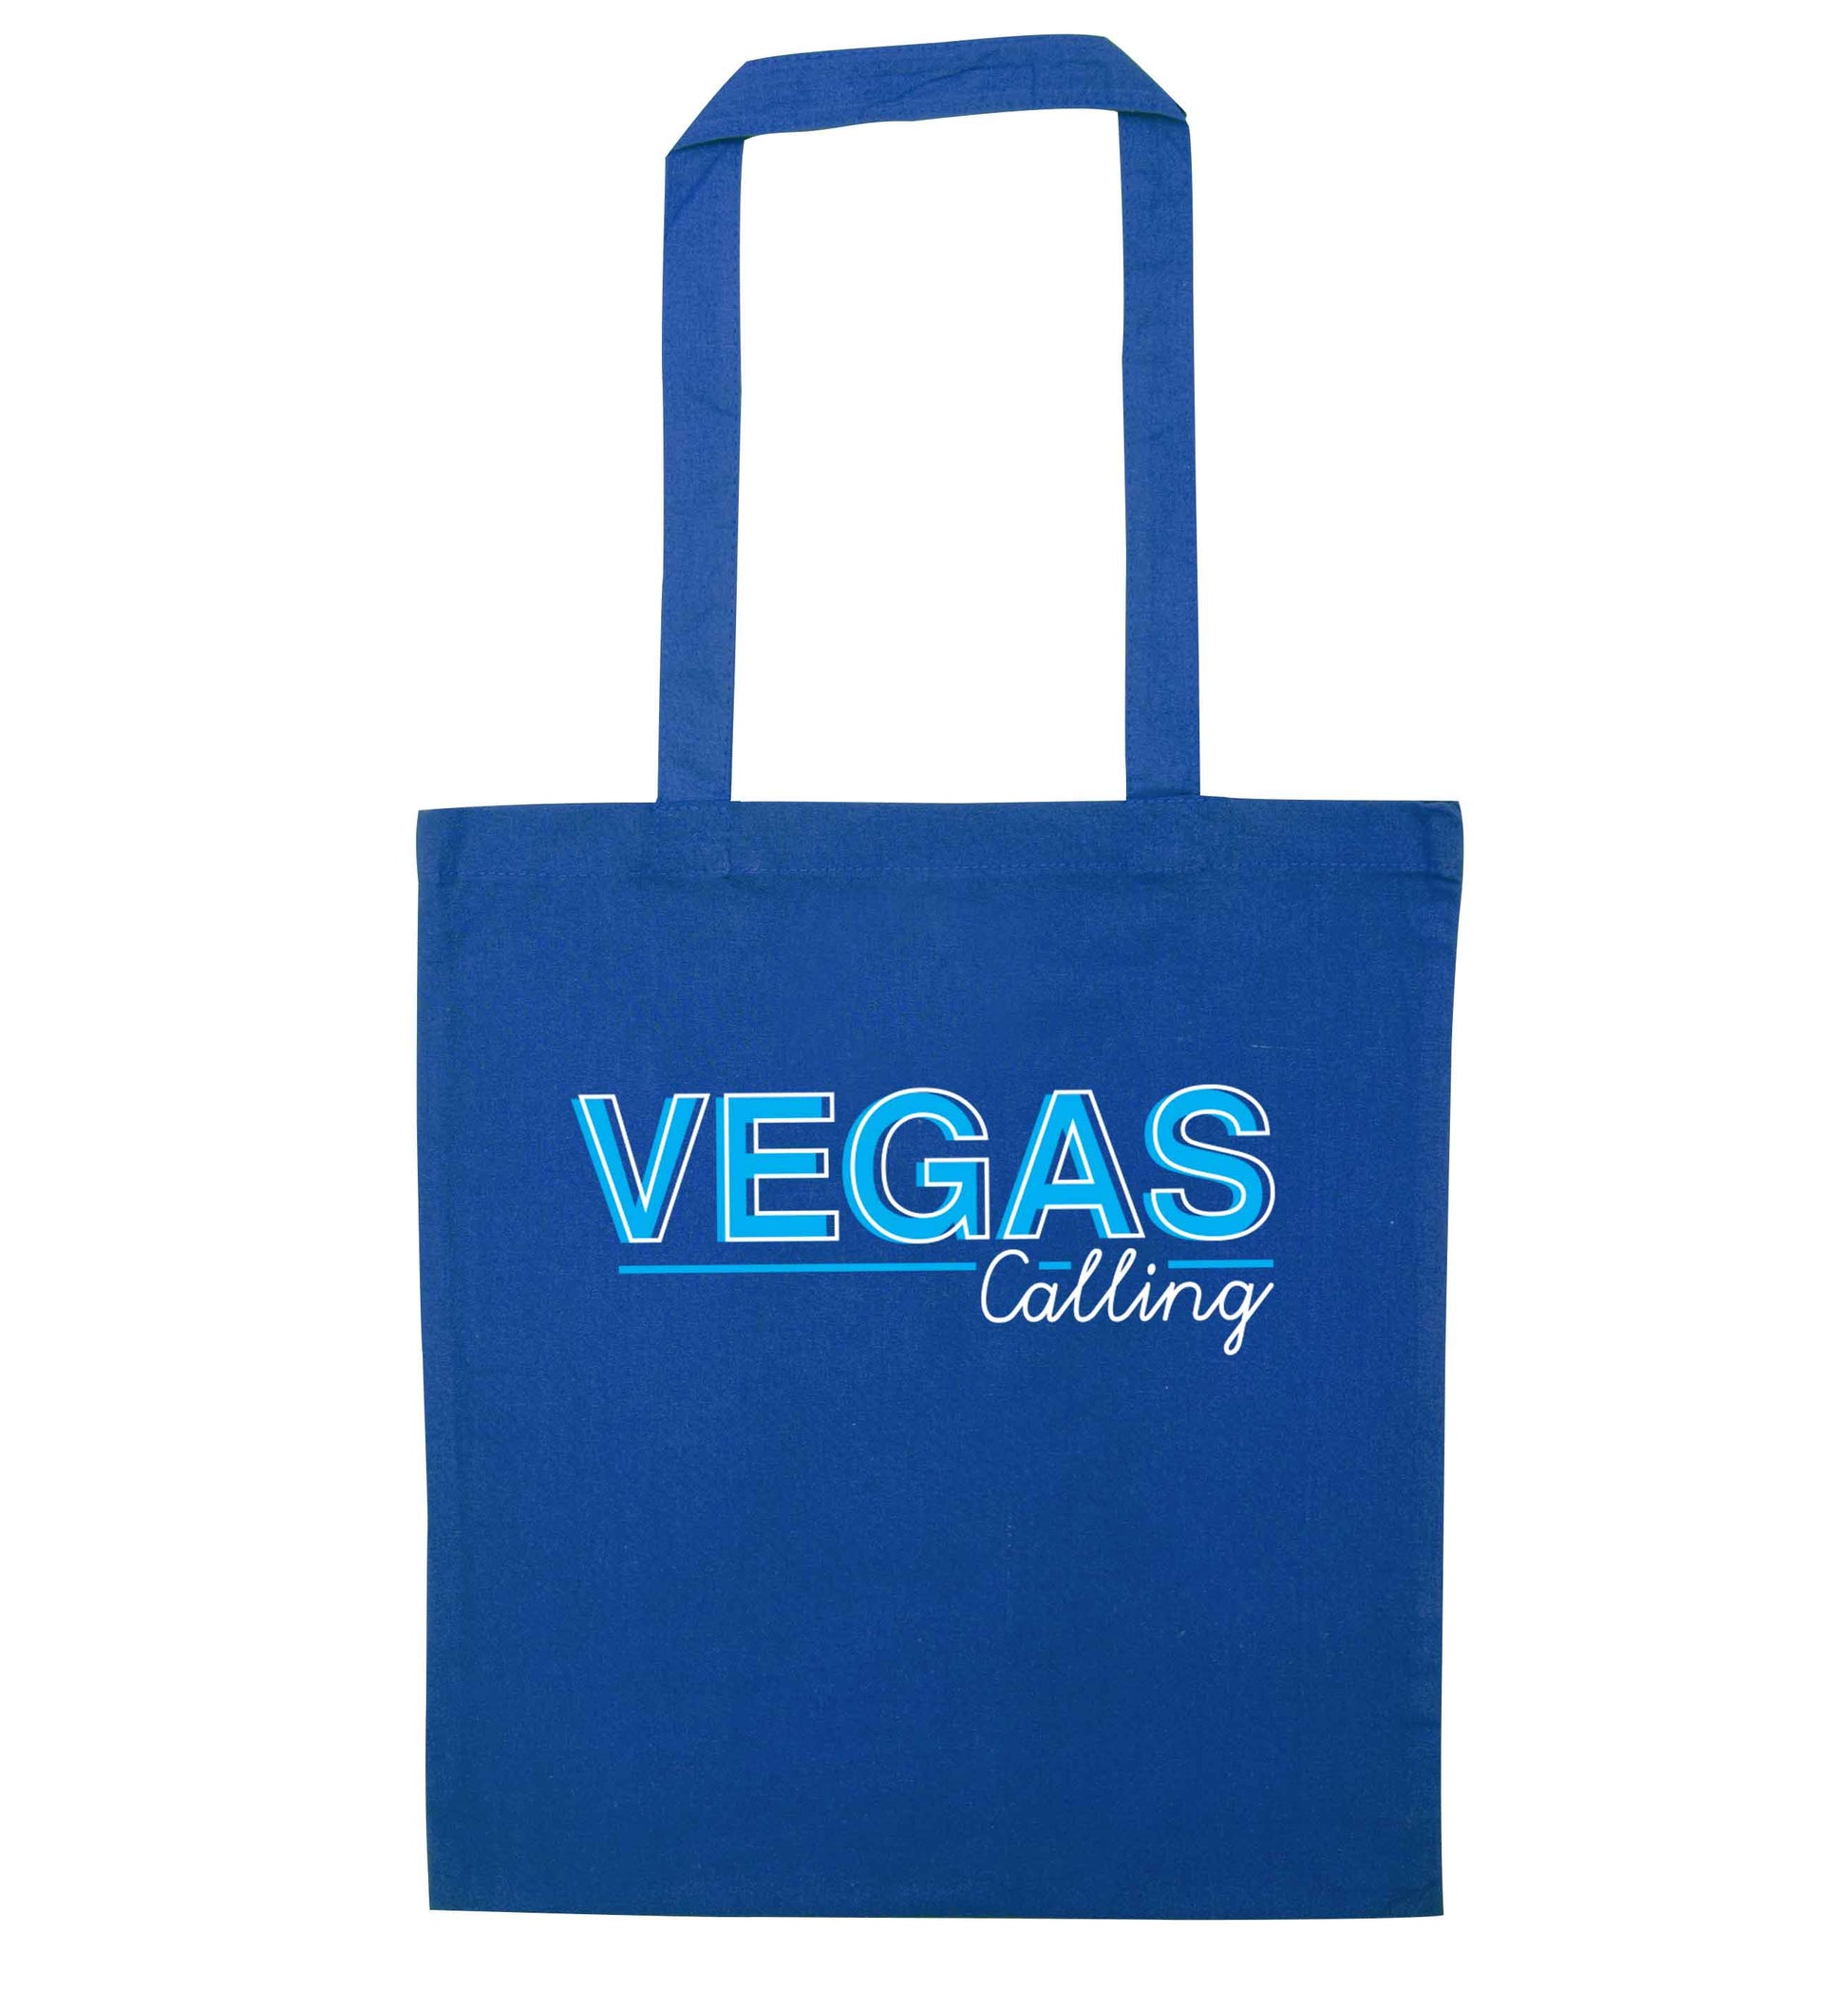 Vegas calling blue tote bag